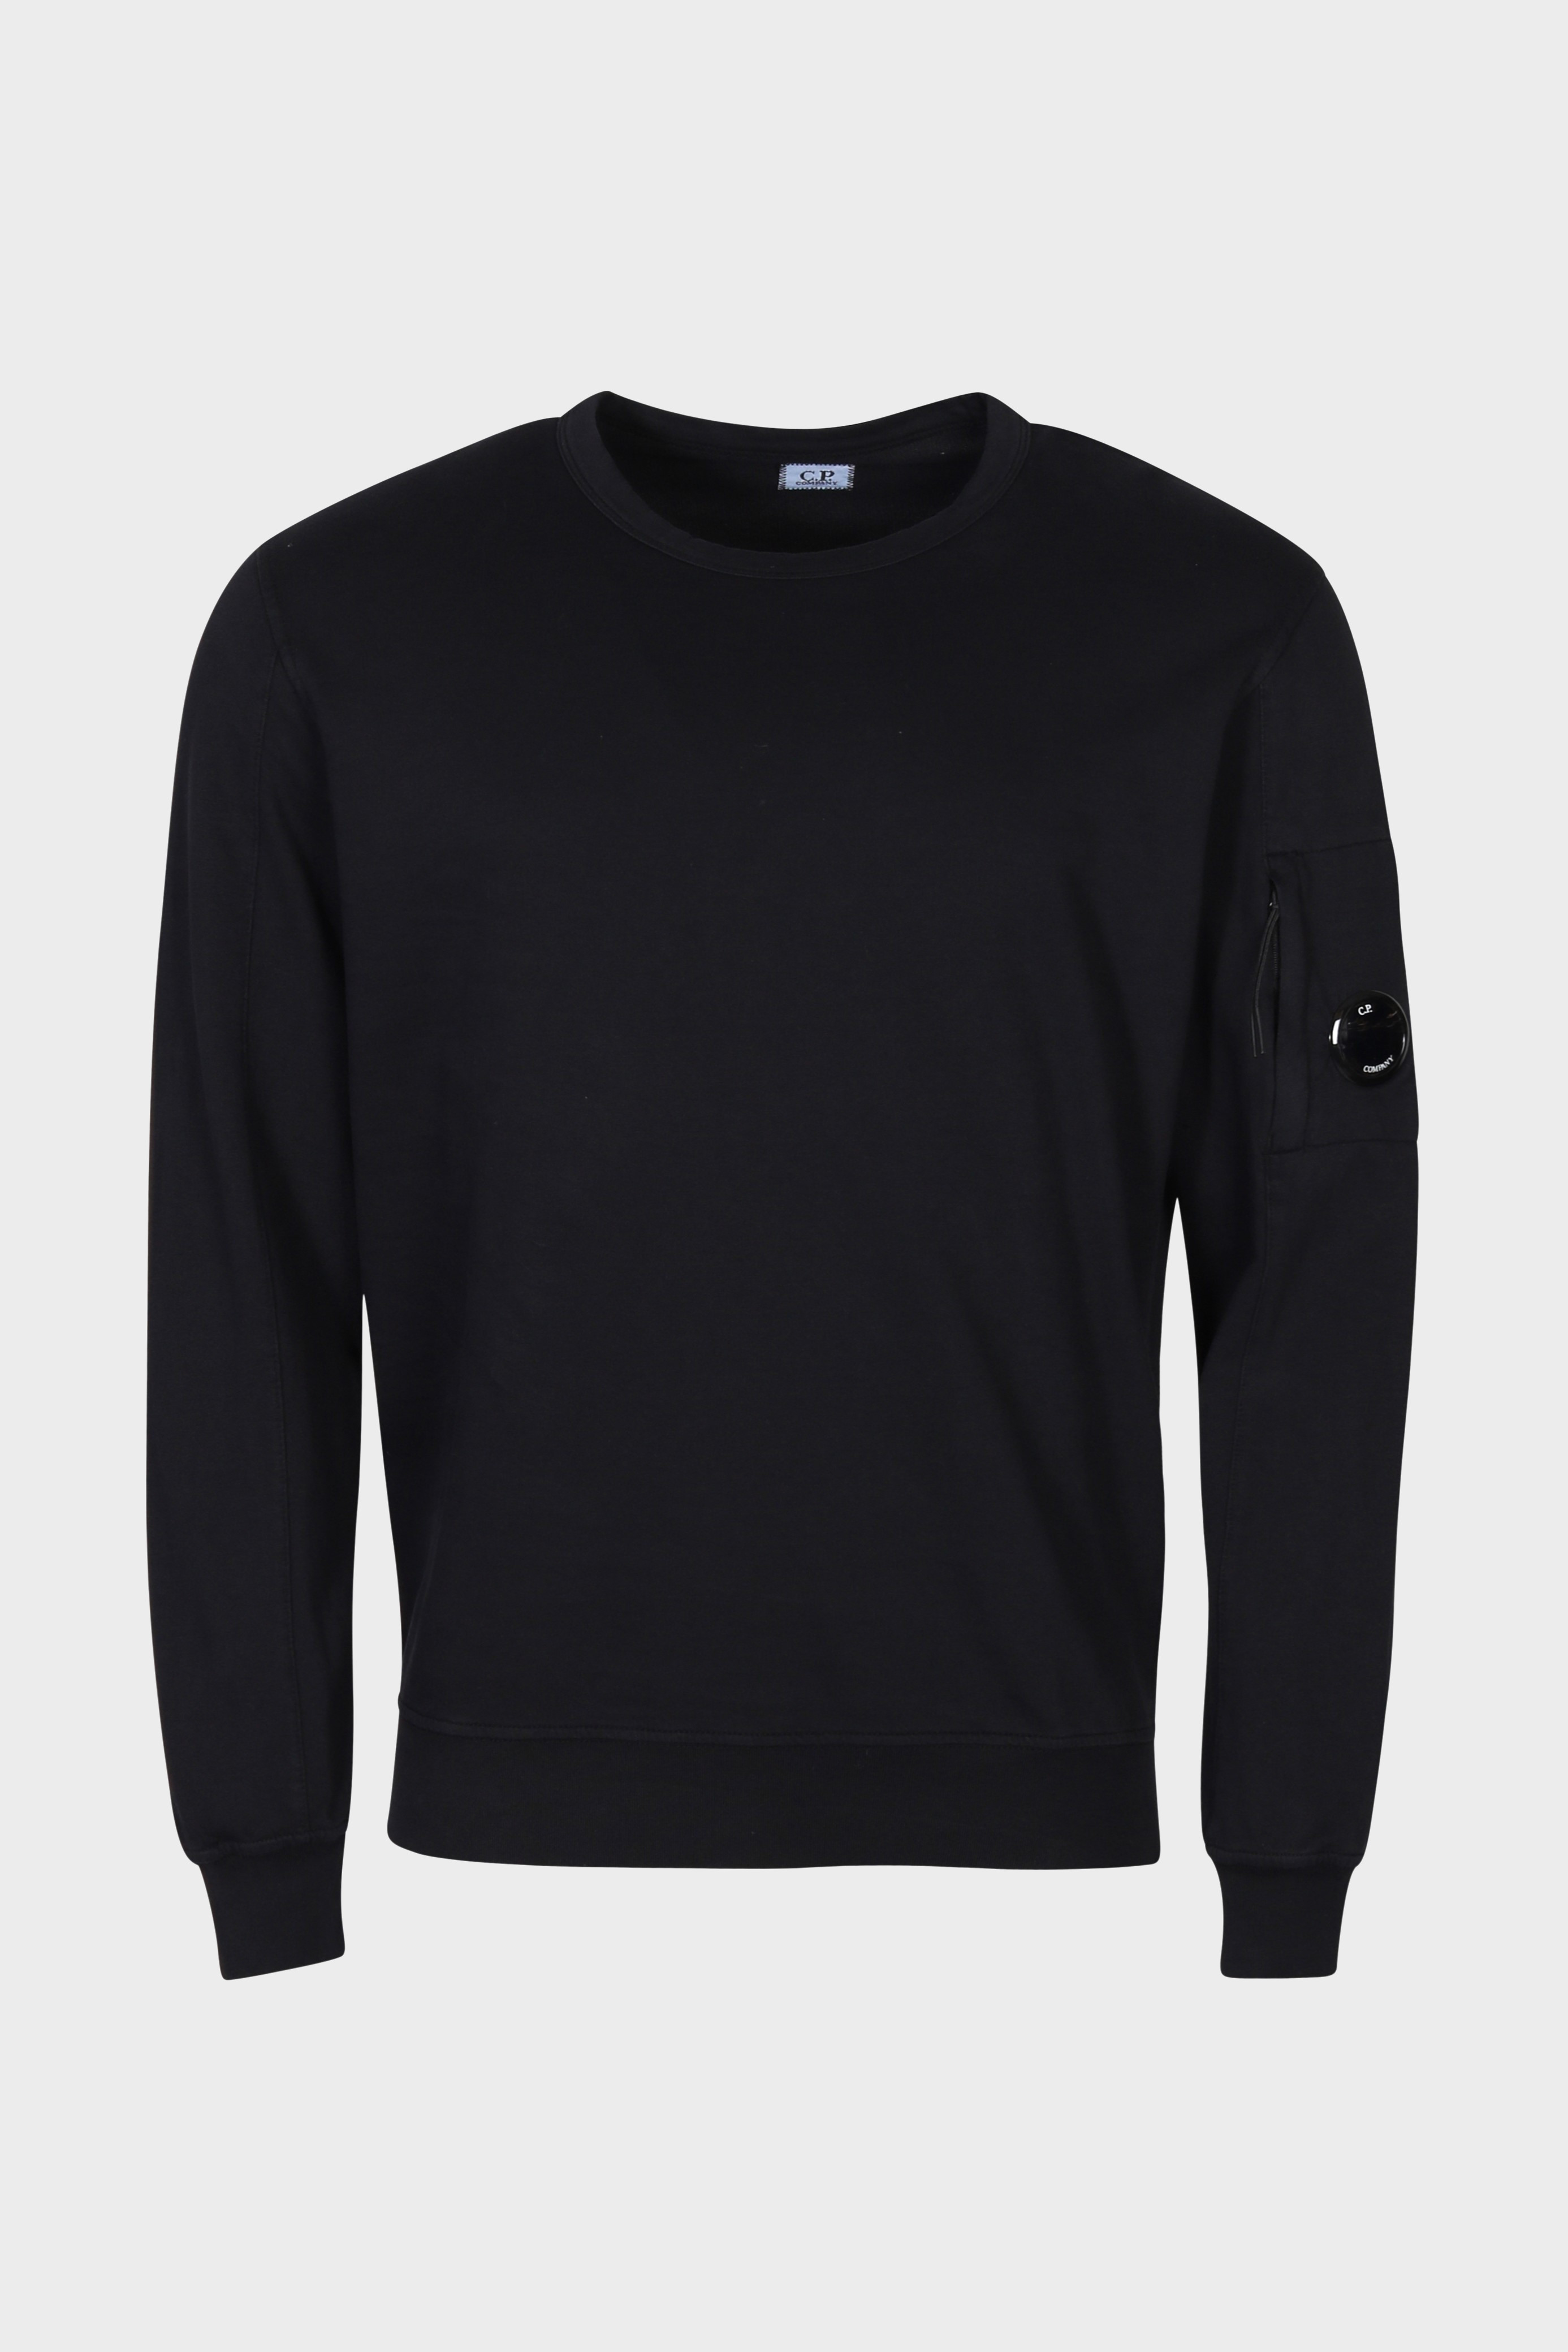 C.P. COMPANY Light Fleece Sweatshirt in Black XL